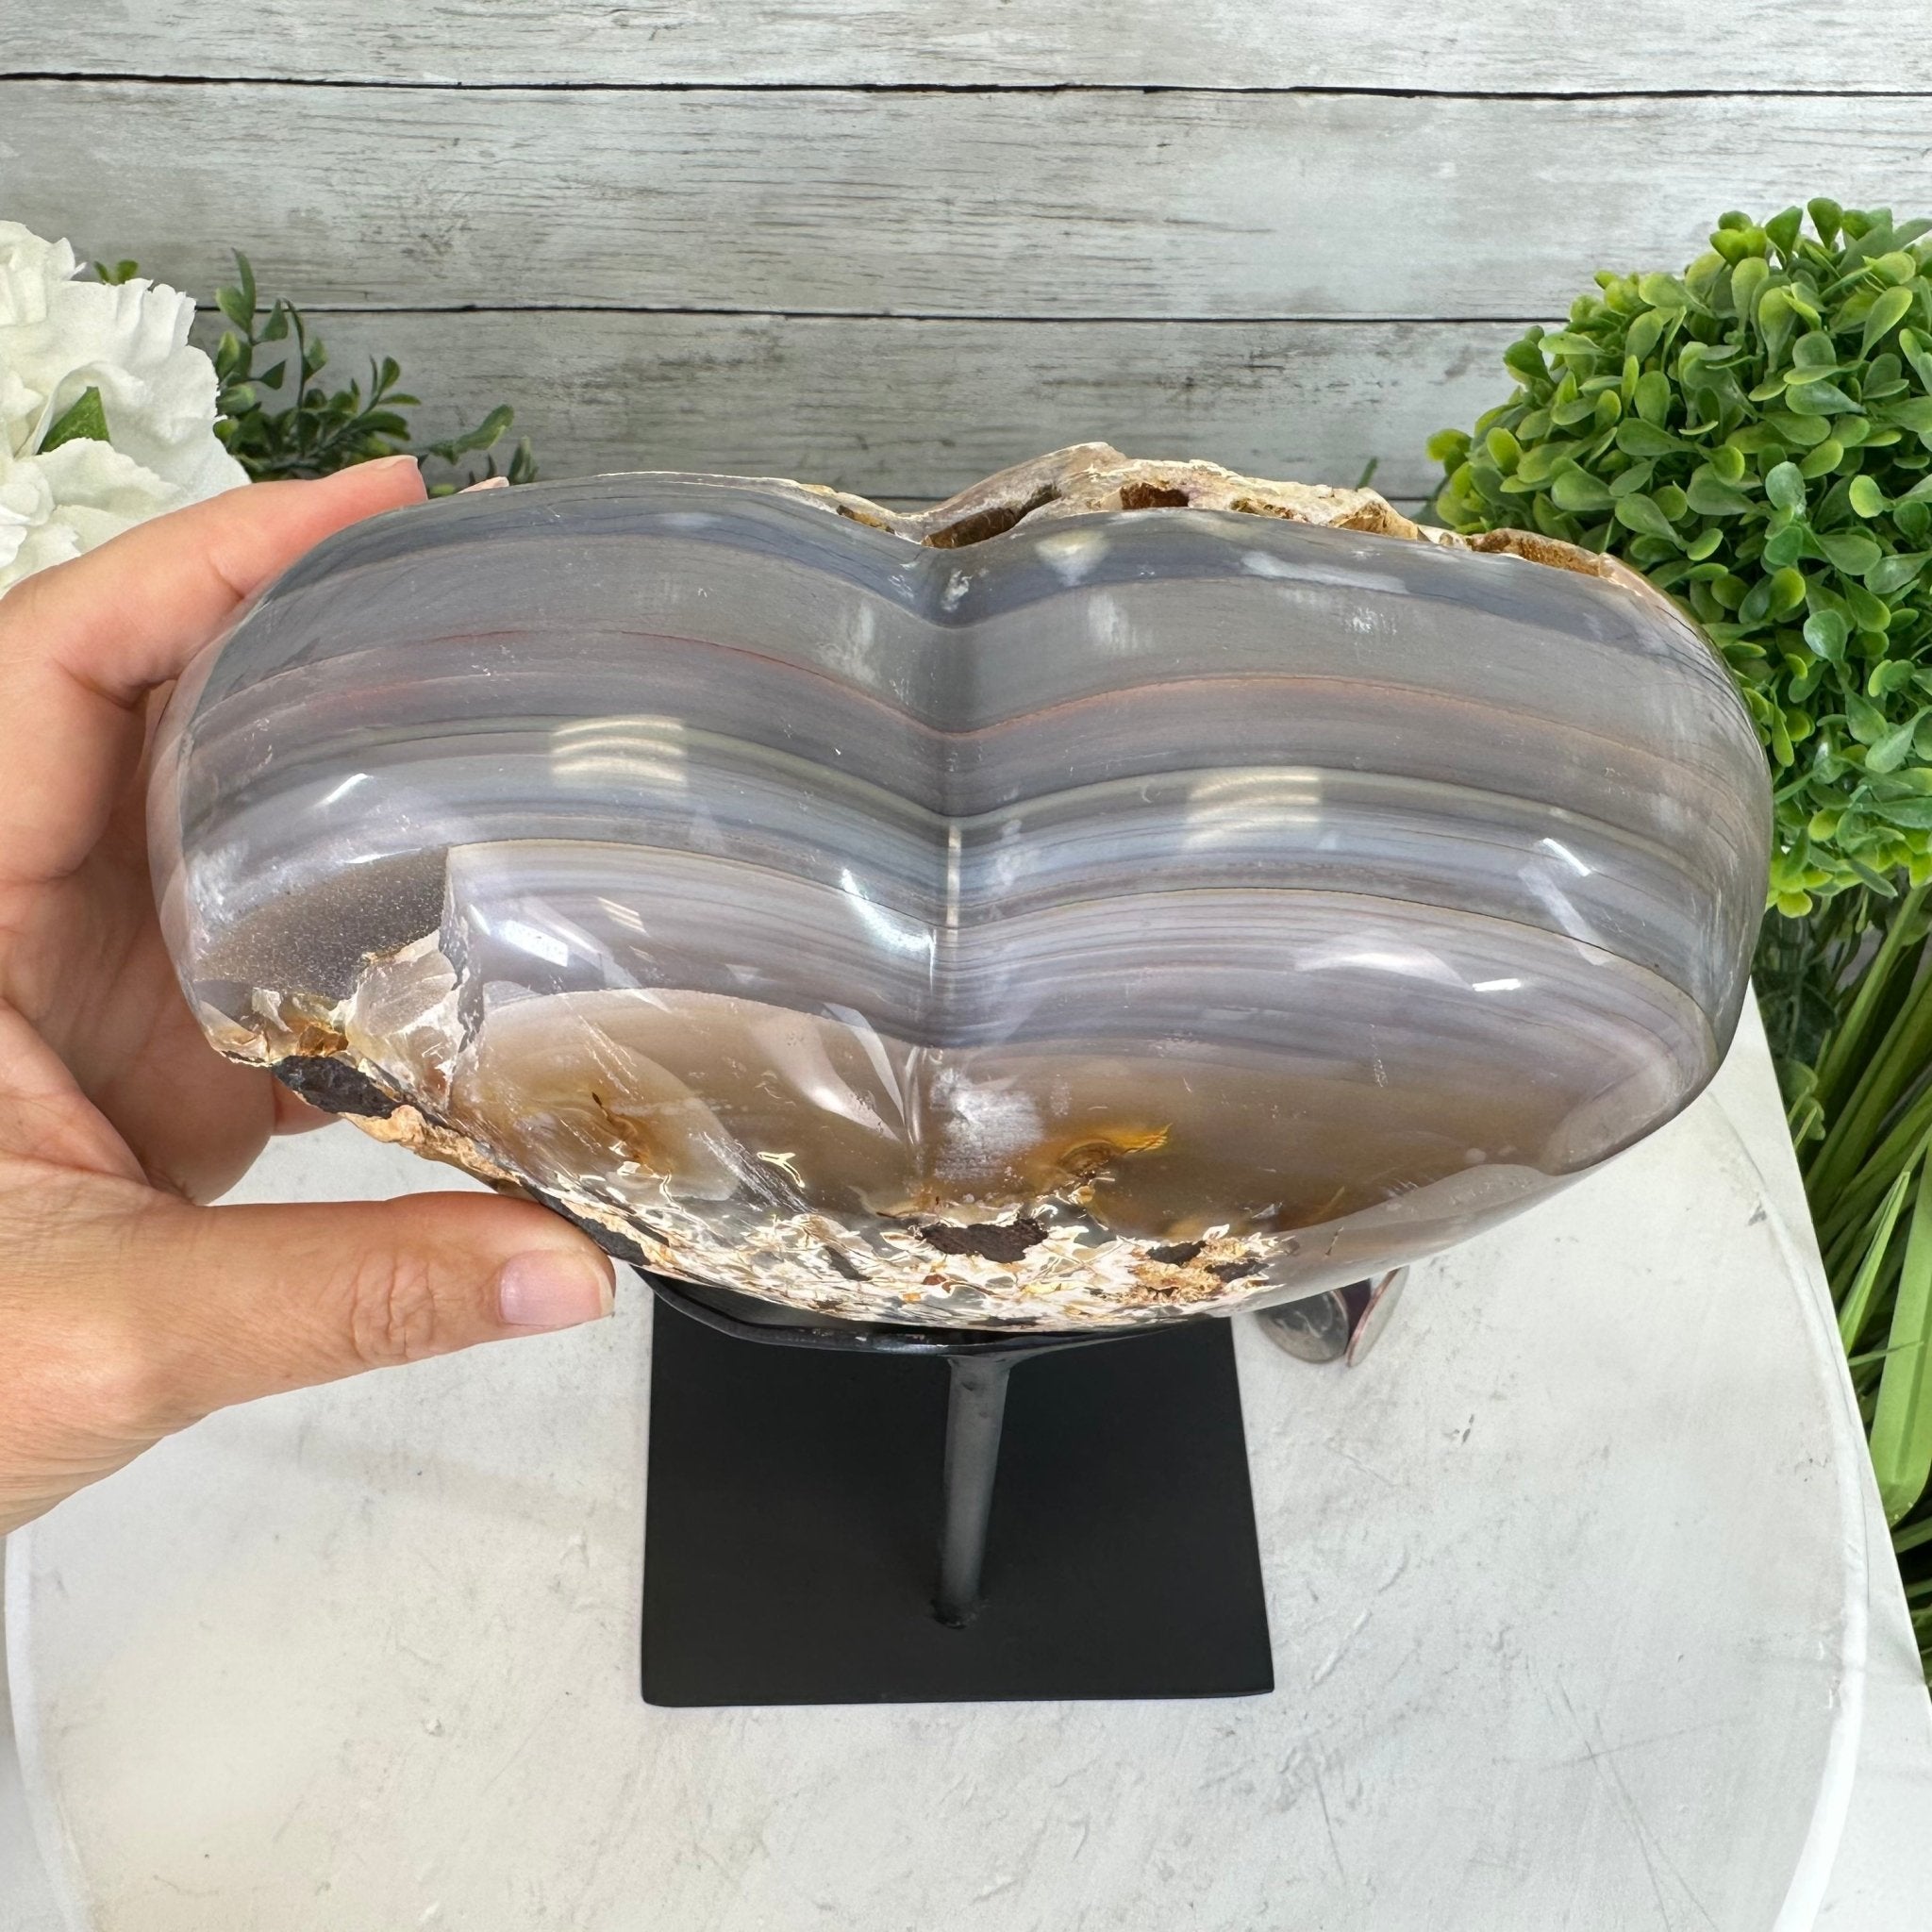 Polished Agate Heart Geode on a Metal Stand, 9.3 lbs & 9" Tall, Model #5468-0086 by Brazil Gems - Brazil GemsBrazil GemsPolished Agate Heart Geode on a Metal Stand, 9.3 lbs & 9" Tall, Model #5468-0086 by Brazil GemsHearts5468-0086